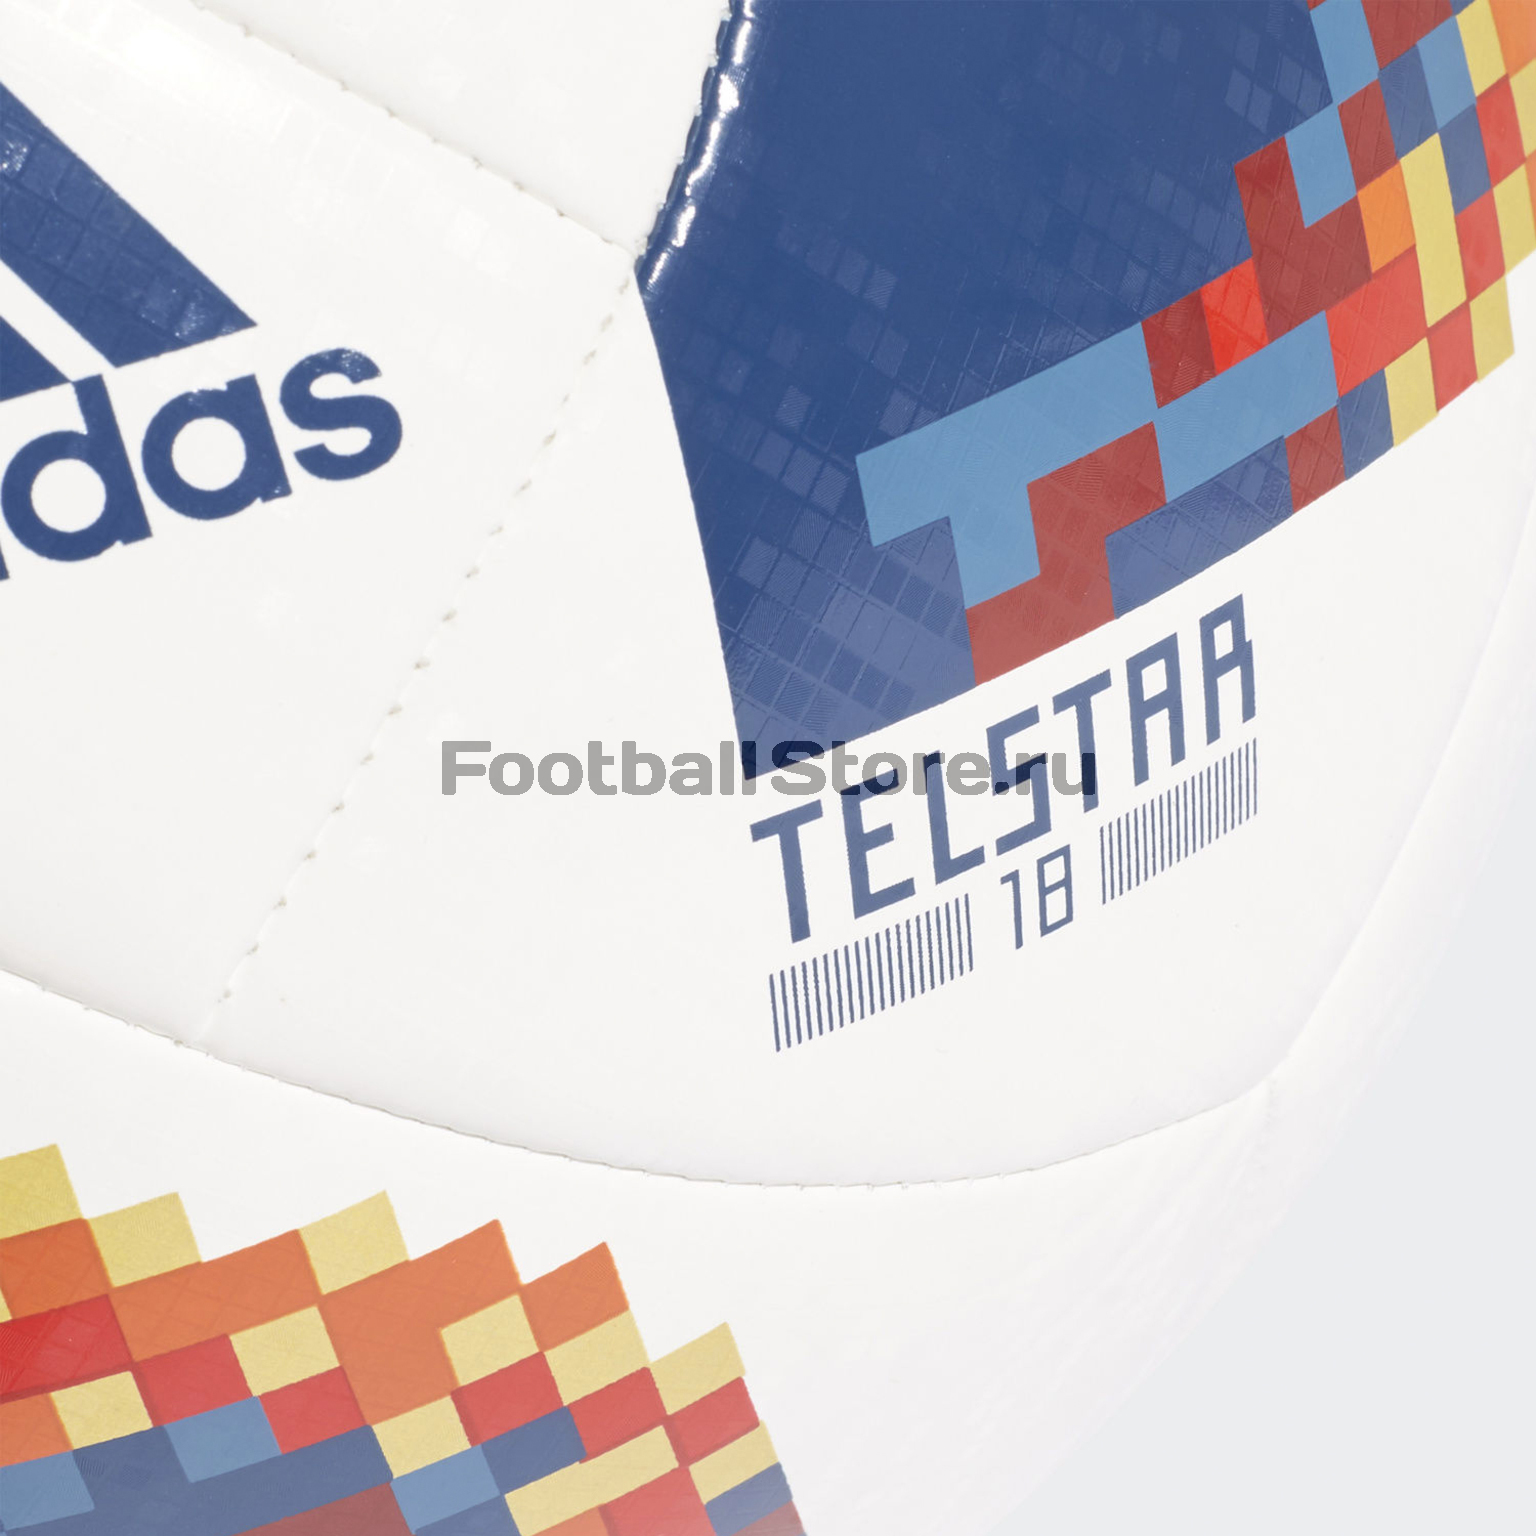 Футбольный мяч Adidas Russia World Cup 18 Ball CE9968